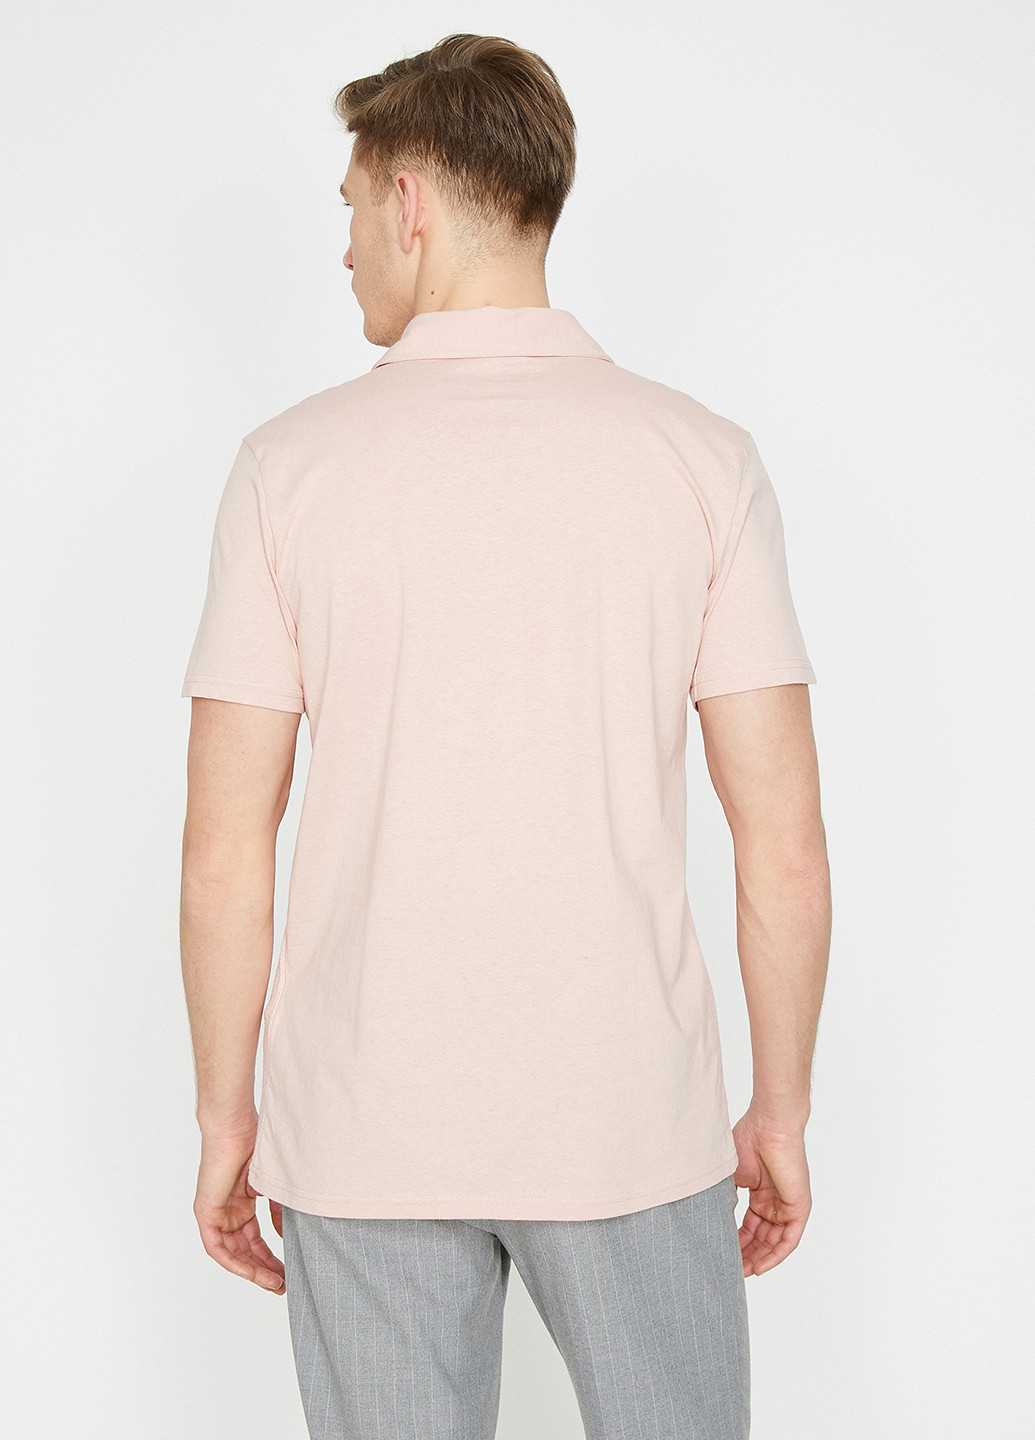 Светло-розовая футболка-поло для мужчин KOTON однотонная